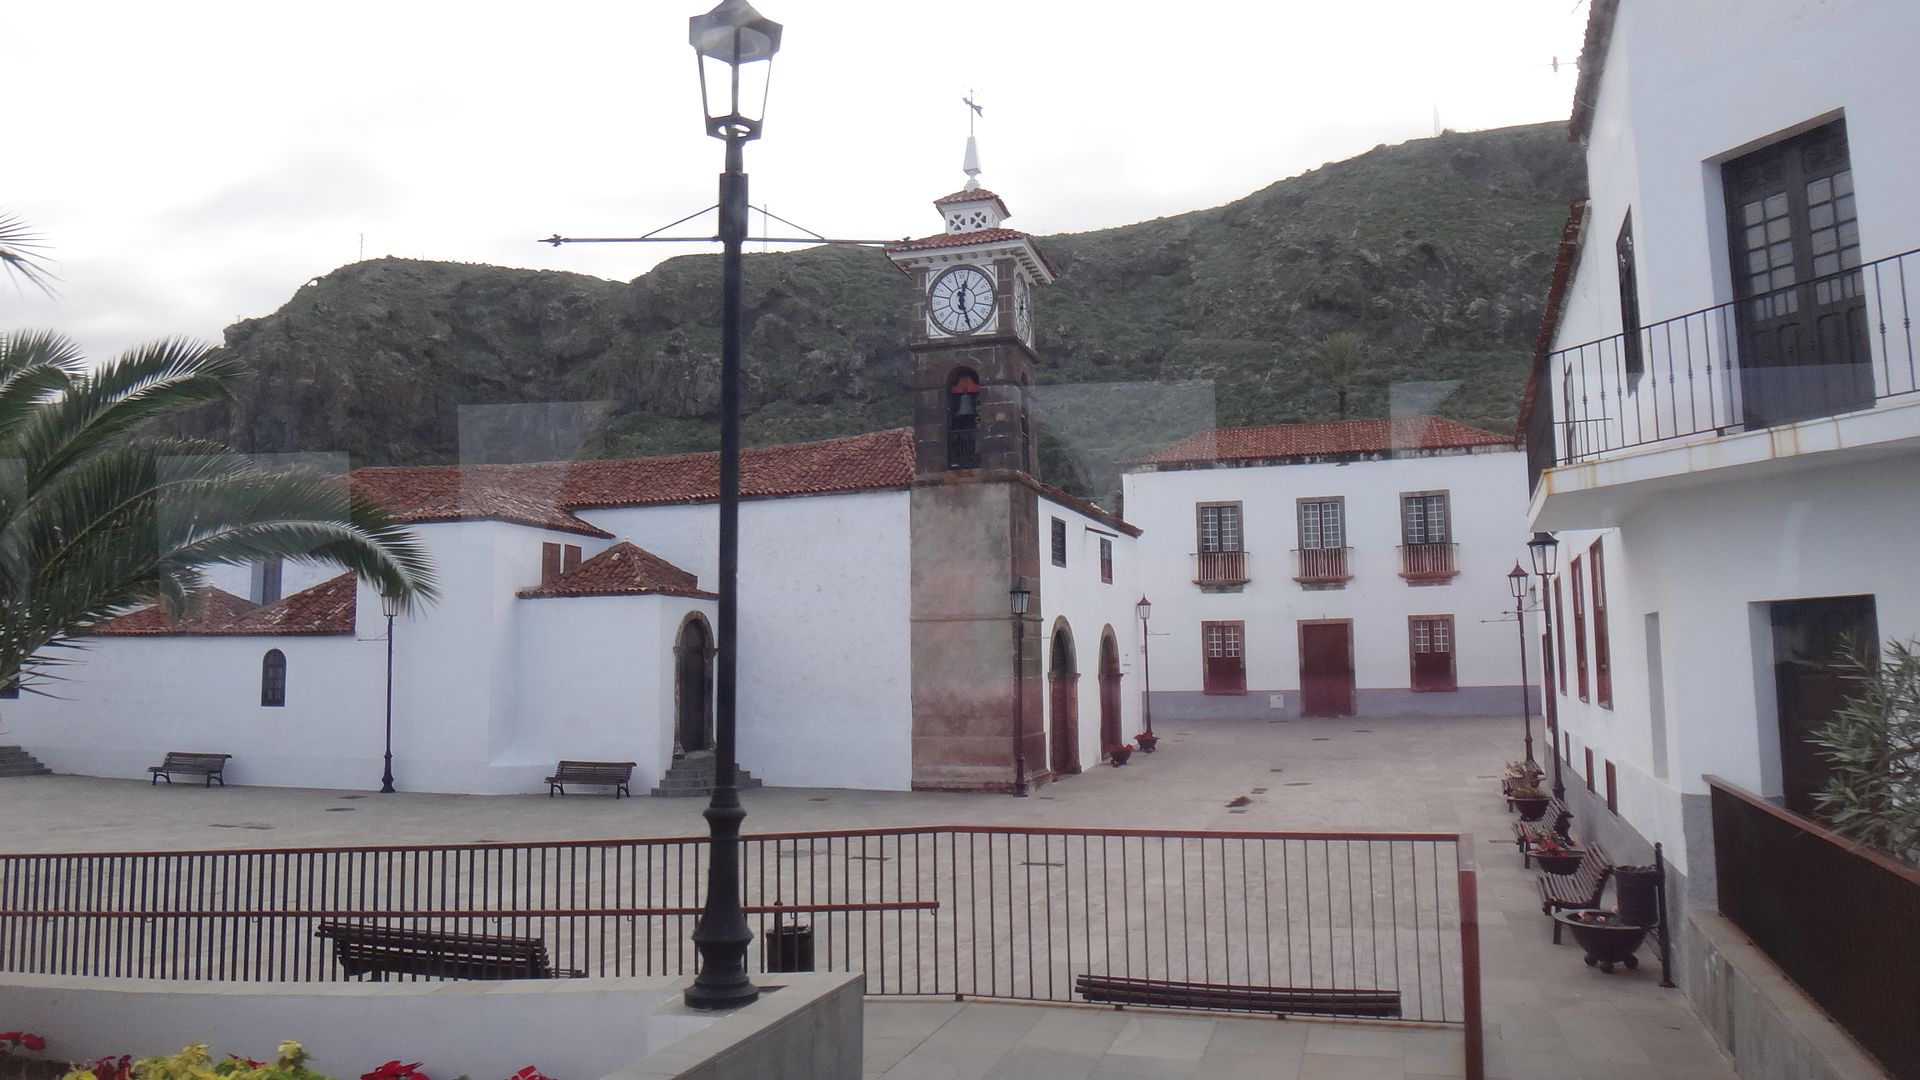 San Juan de la Rambla